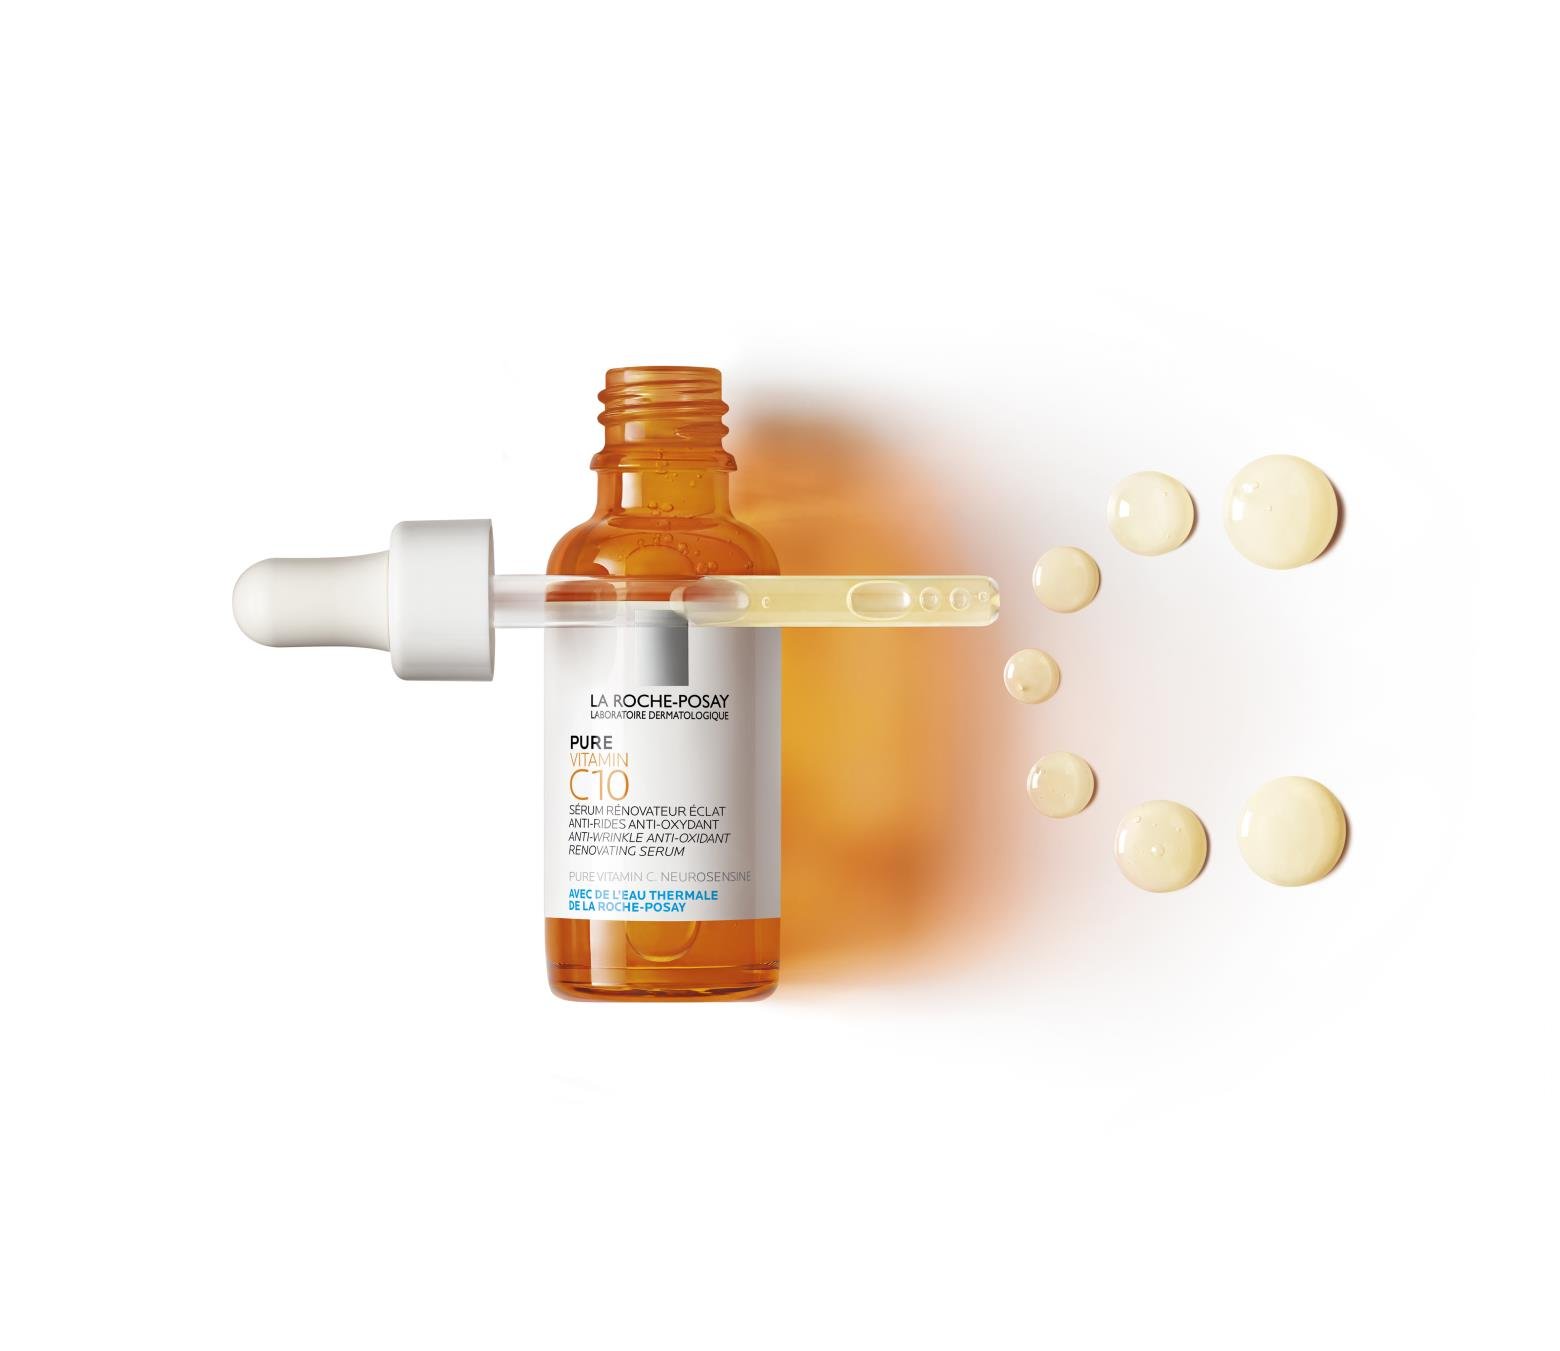 Сыворотка-антиоксидант с витамином С против морщин La Roche-Posay Pure Vitamin C10, для обновления кожи лица, 30 мл - фото 4